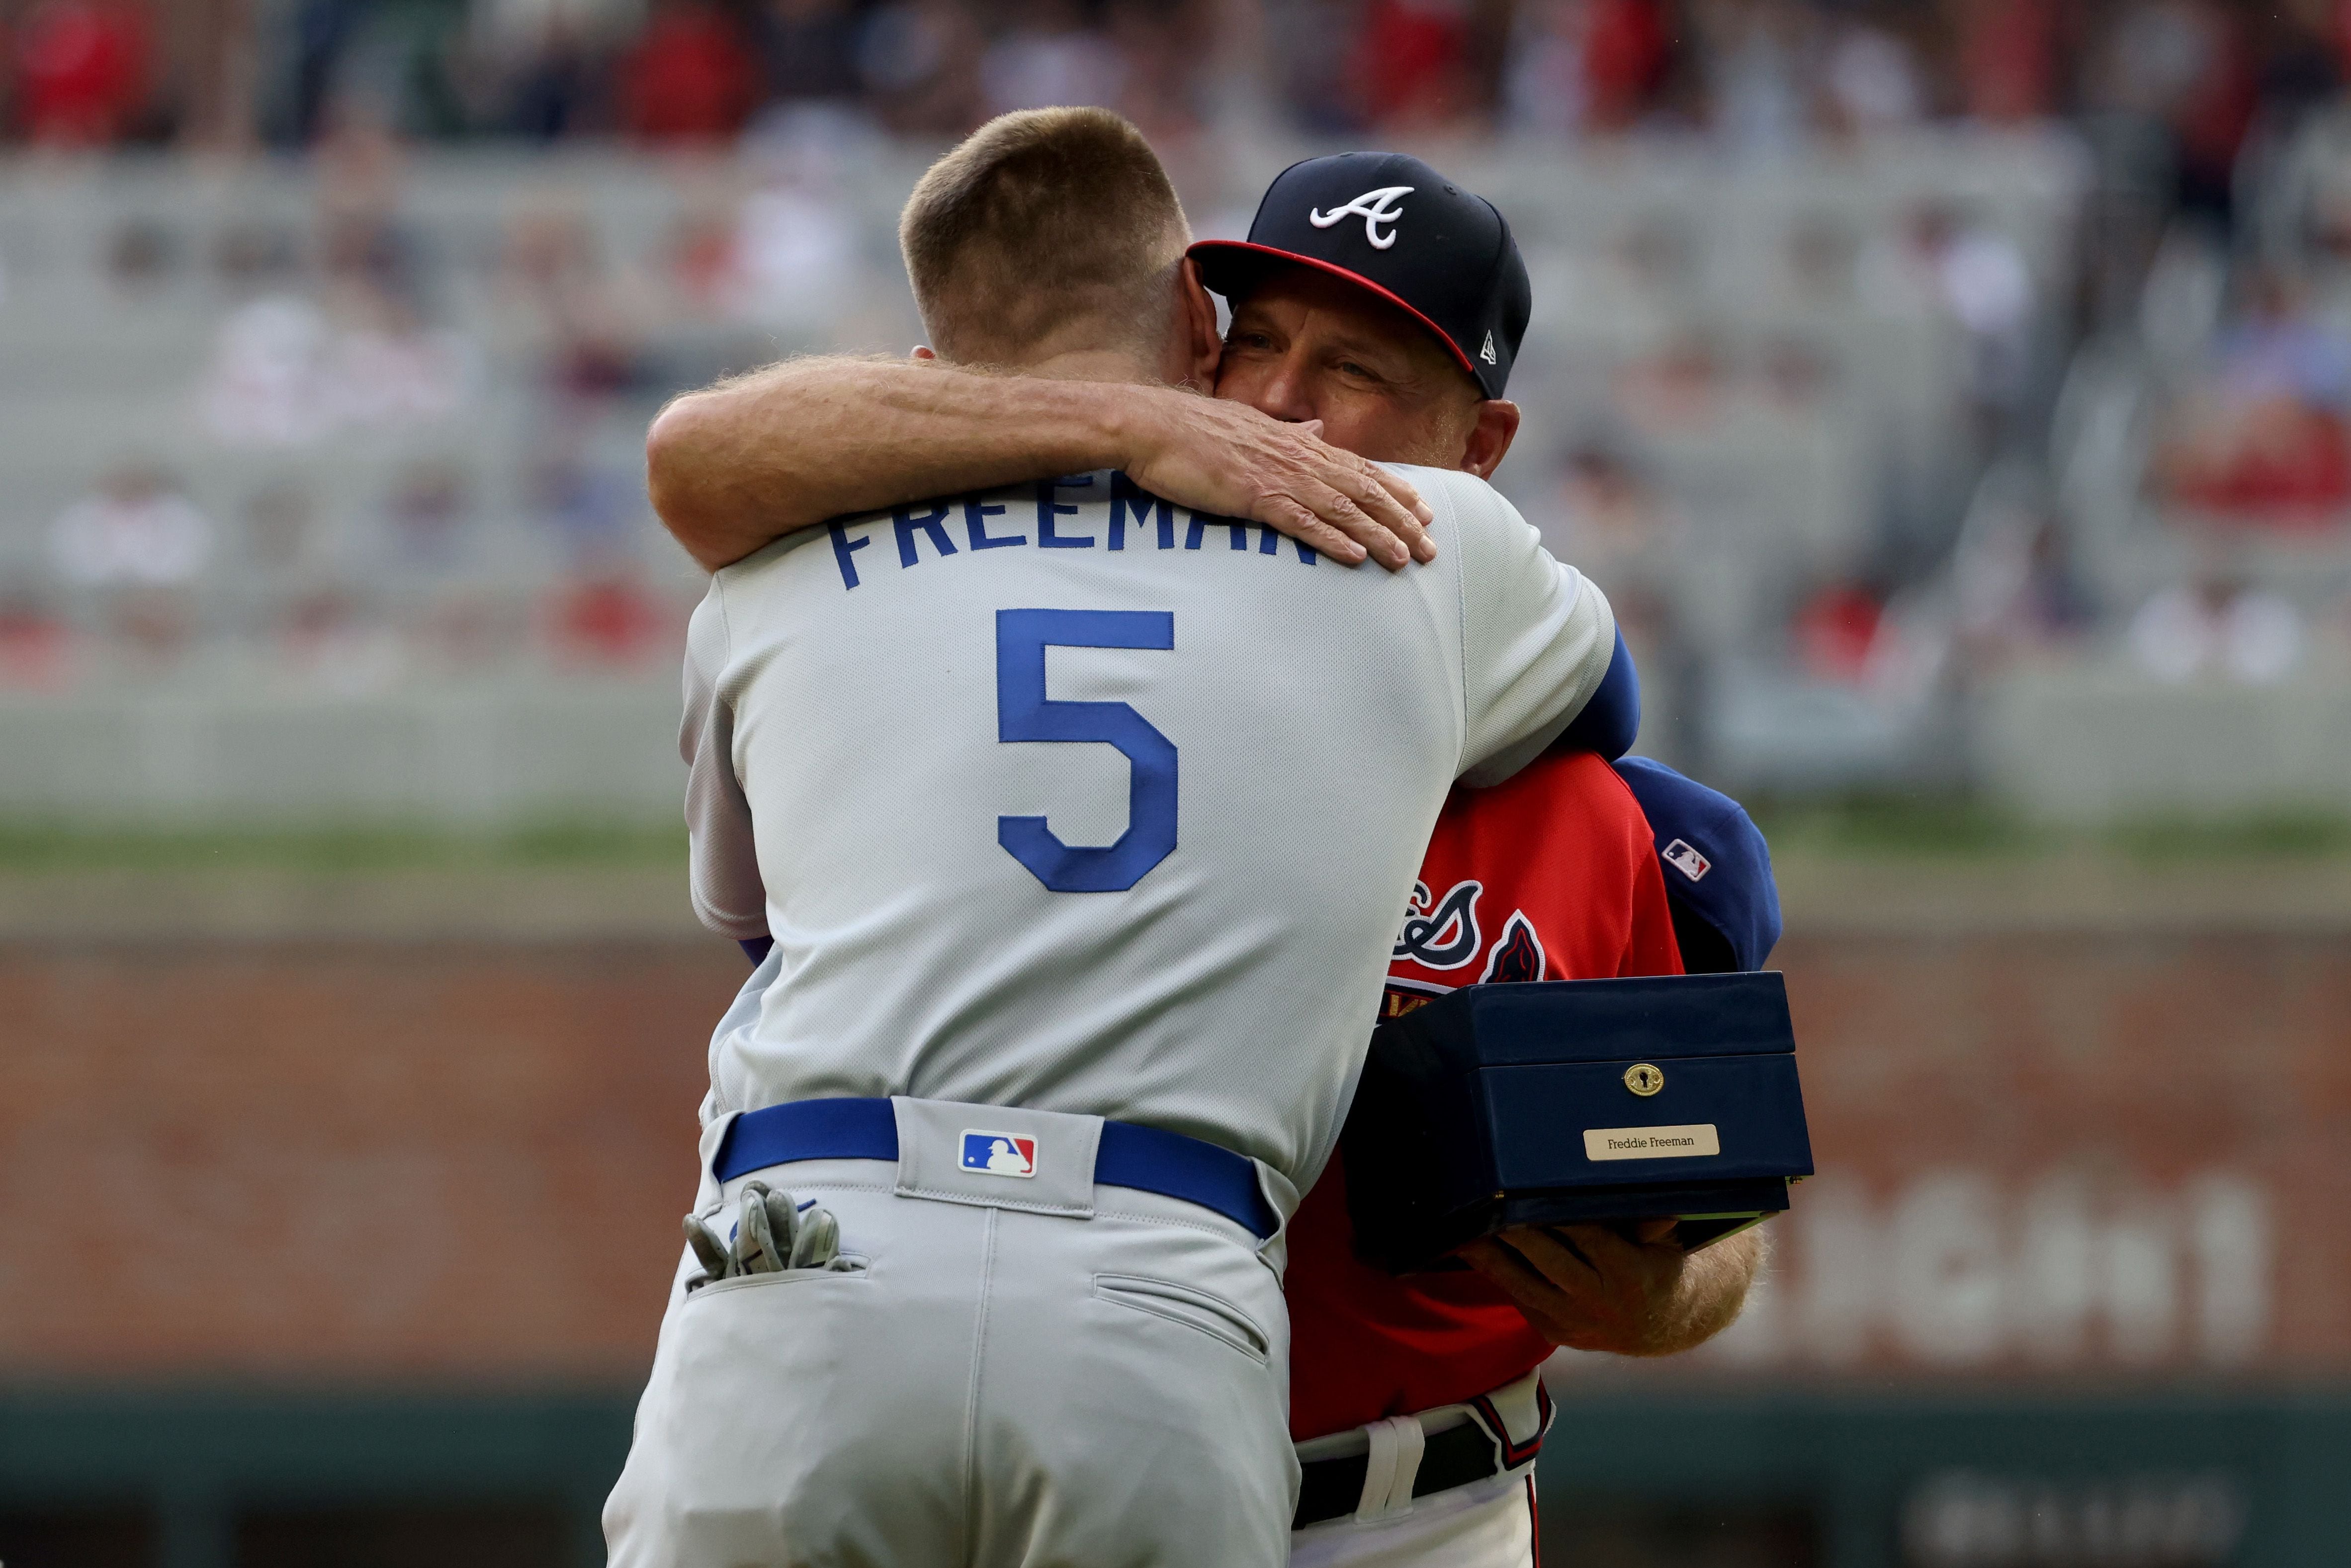 Freddie Freeman's view on leadership evolved with Braves